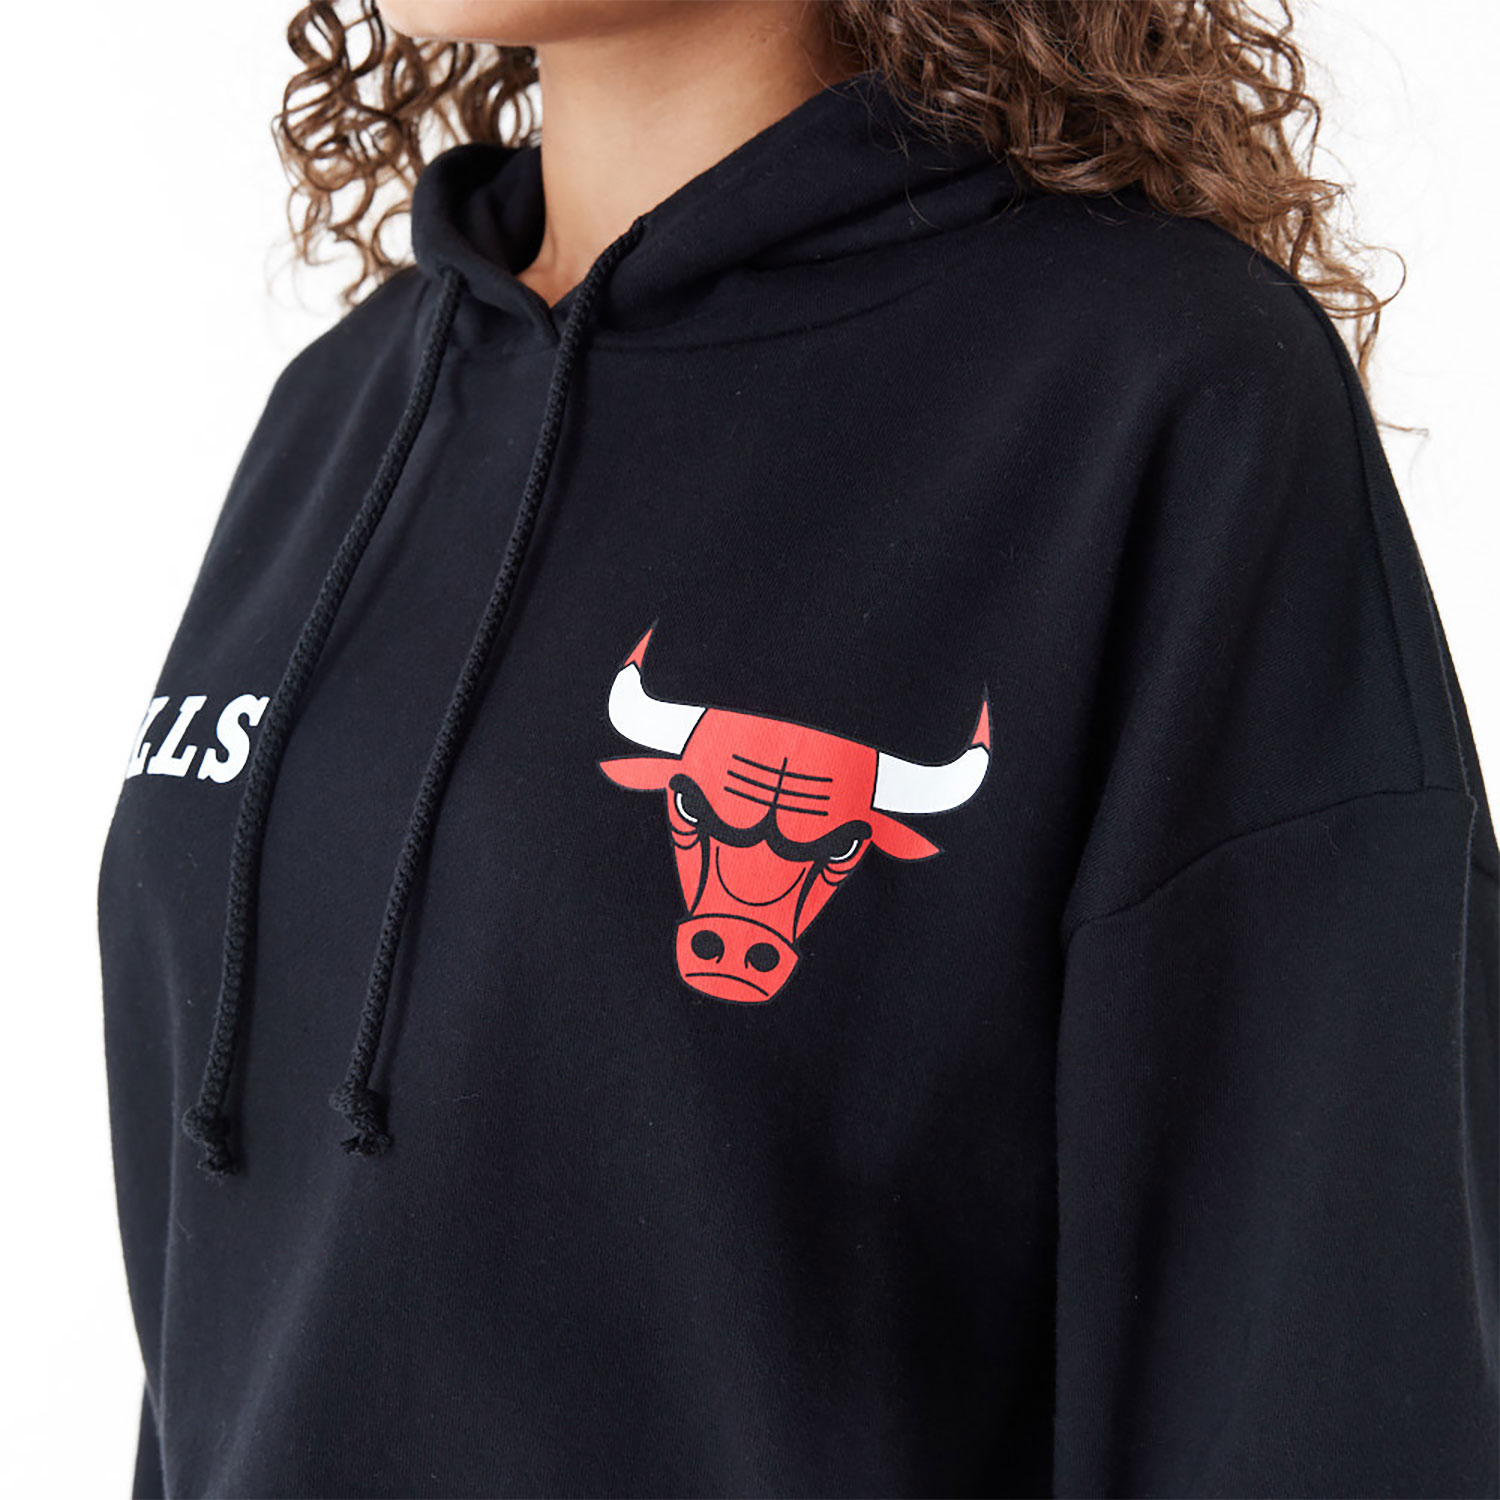 Chicago Bulls Womens NBA Team Logo Black Crop Pullover Hoodie